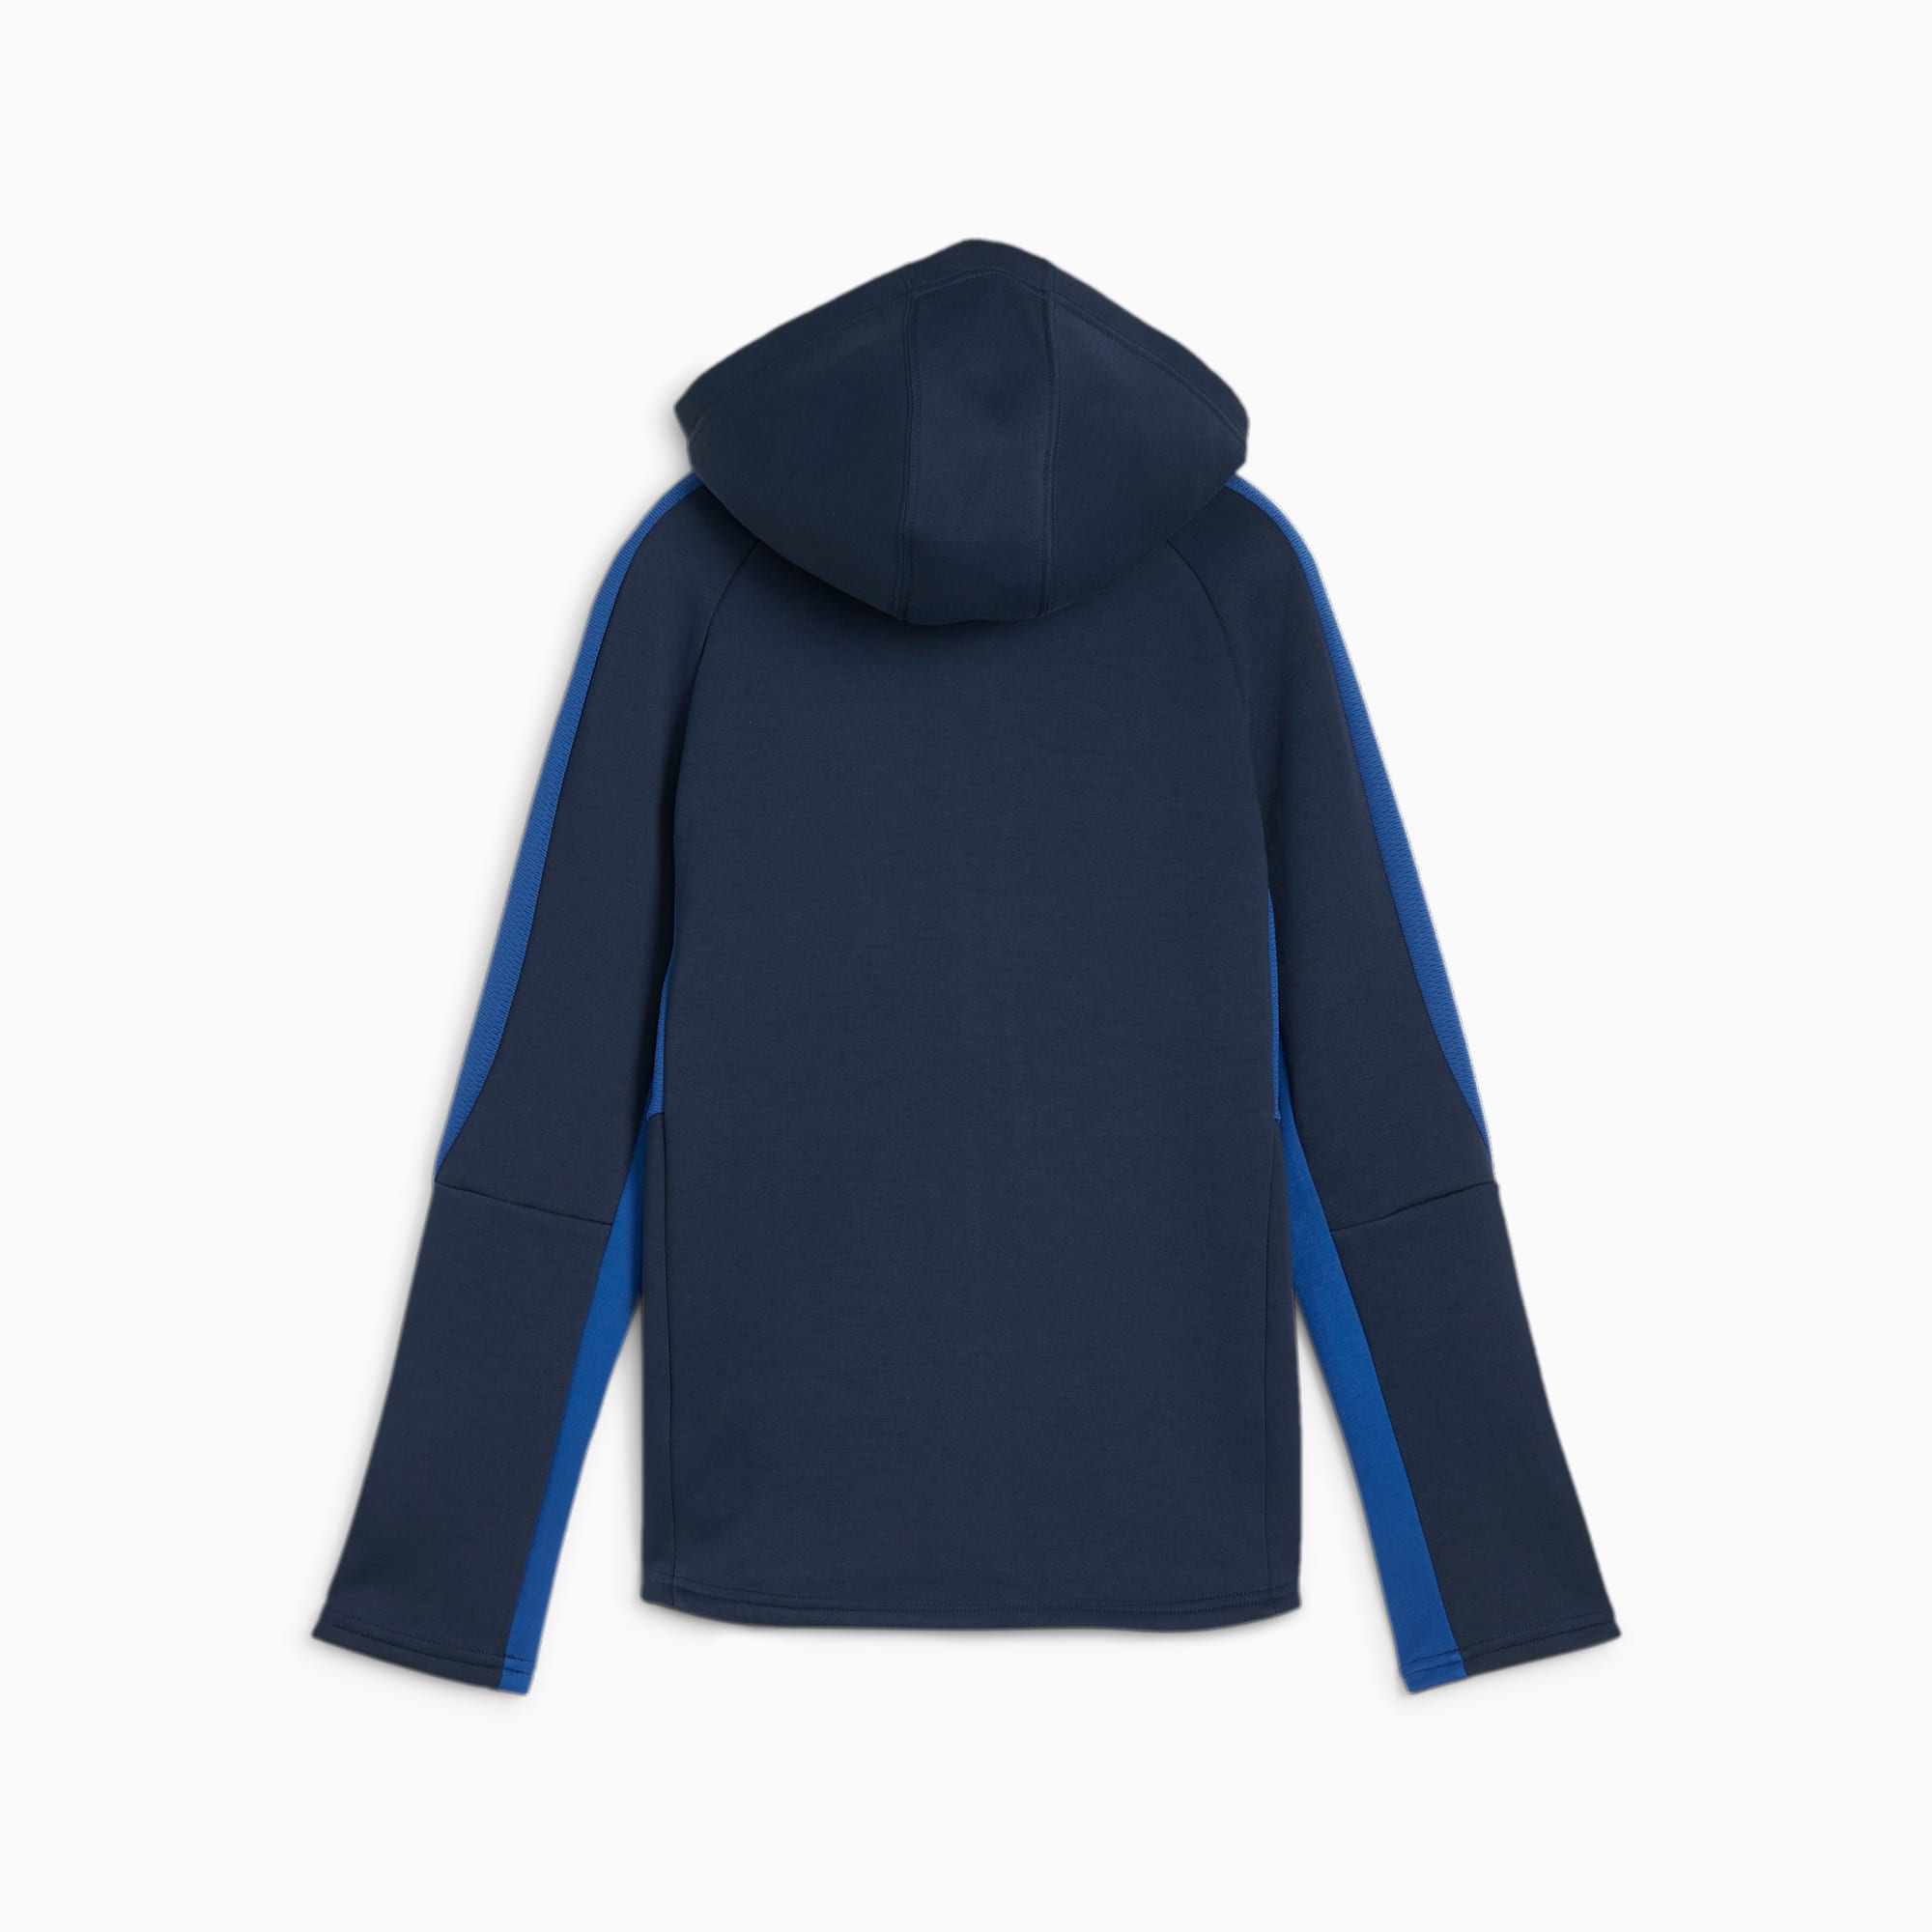 PUMA Evostripe Youth Full-Zip Hoodie, Dark Blue, Size 116, Clothing